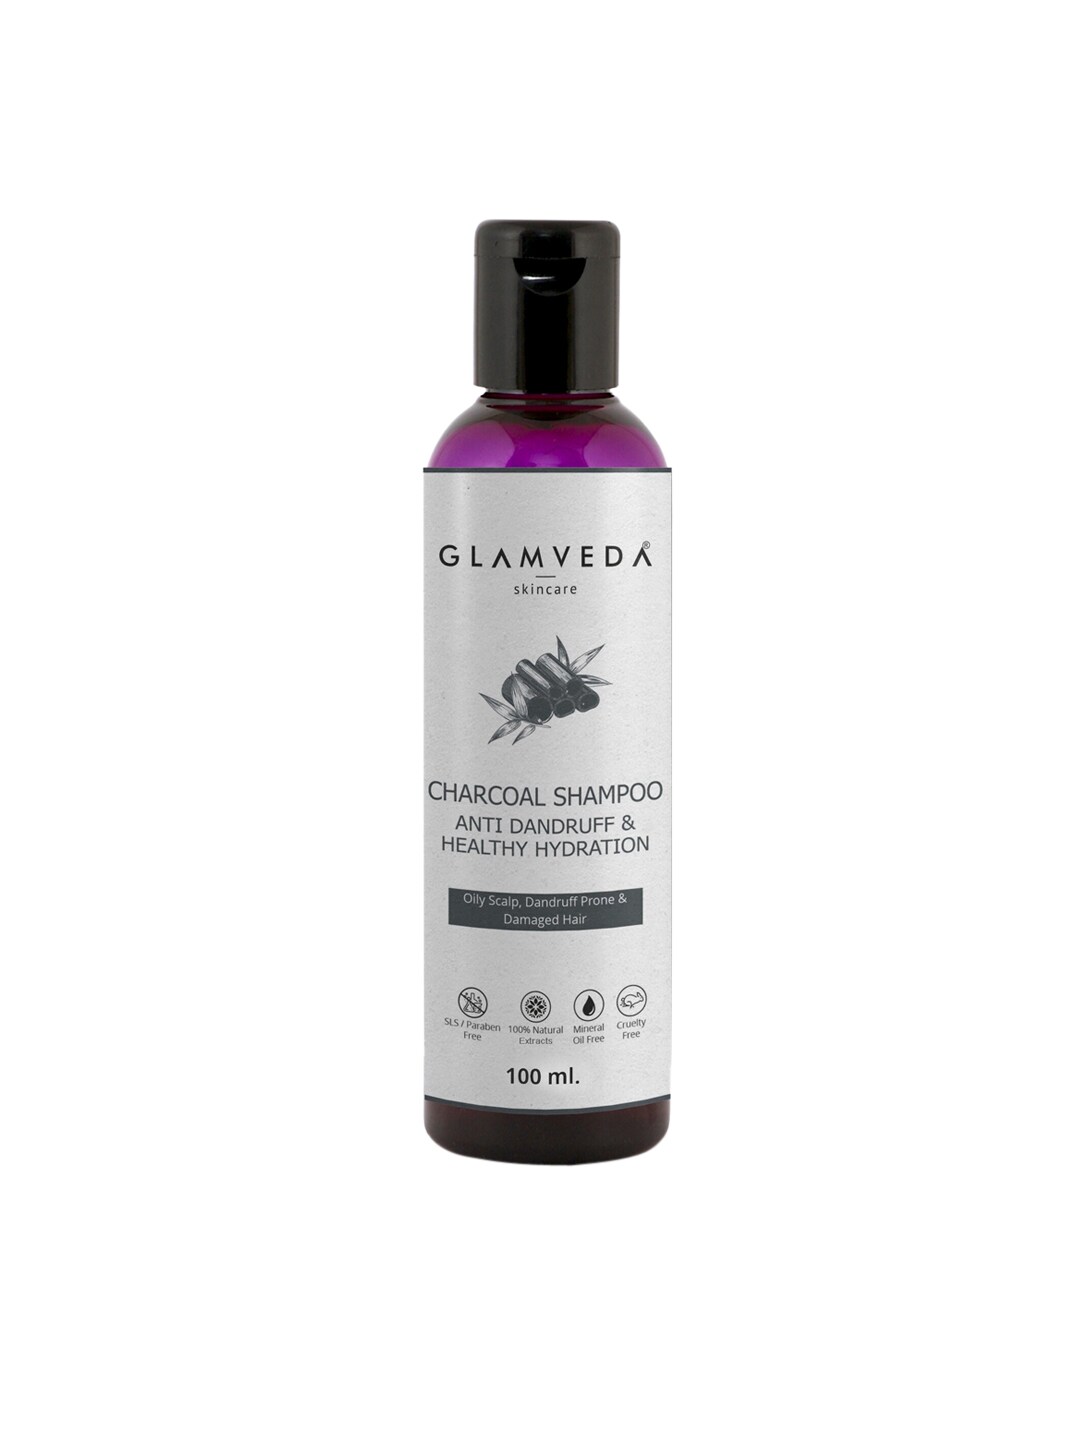 GLAMVEDA Anti Dandruff & Healthy Hydration Charcoal Shampoo - 100 ml Price in India